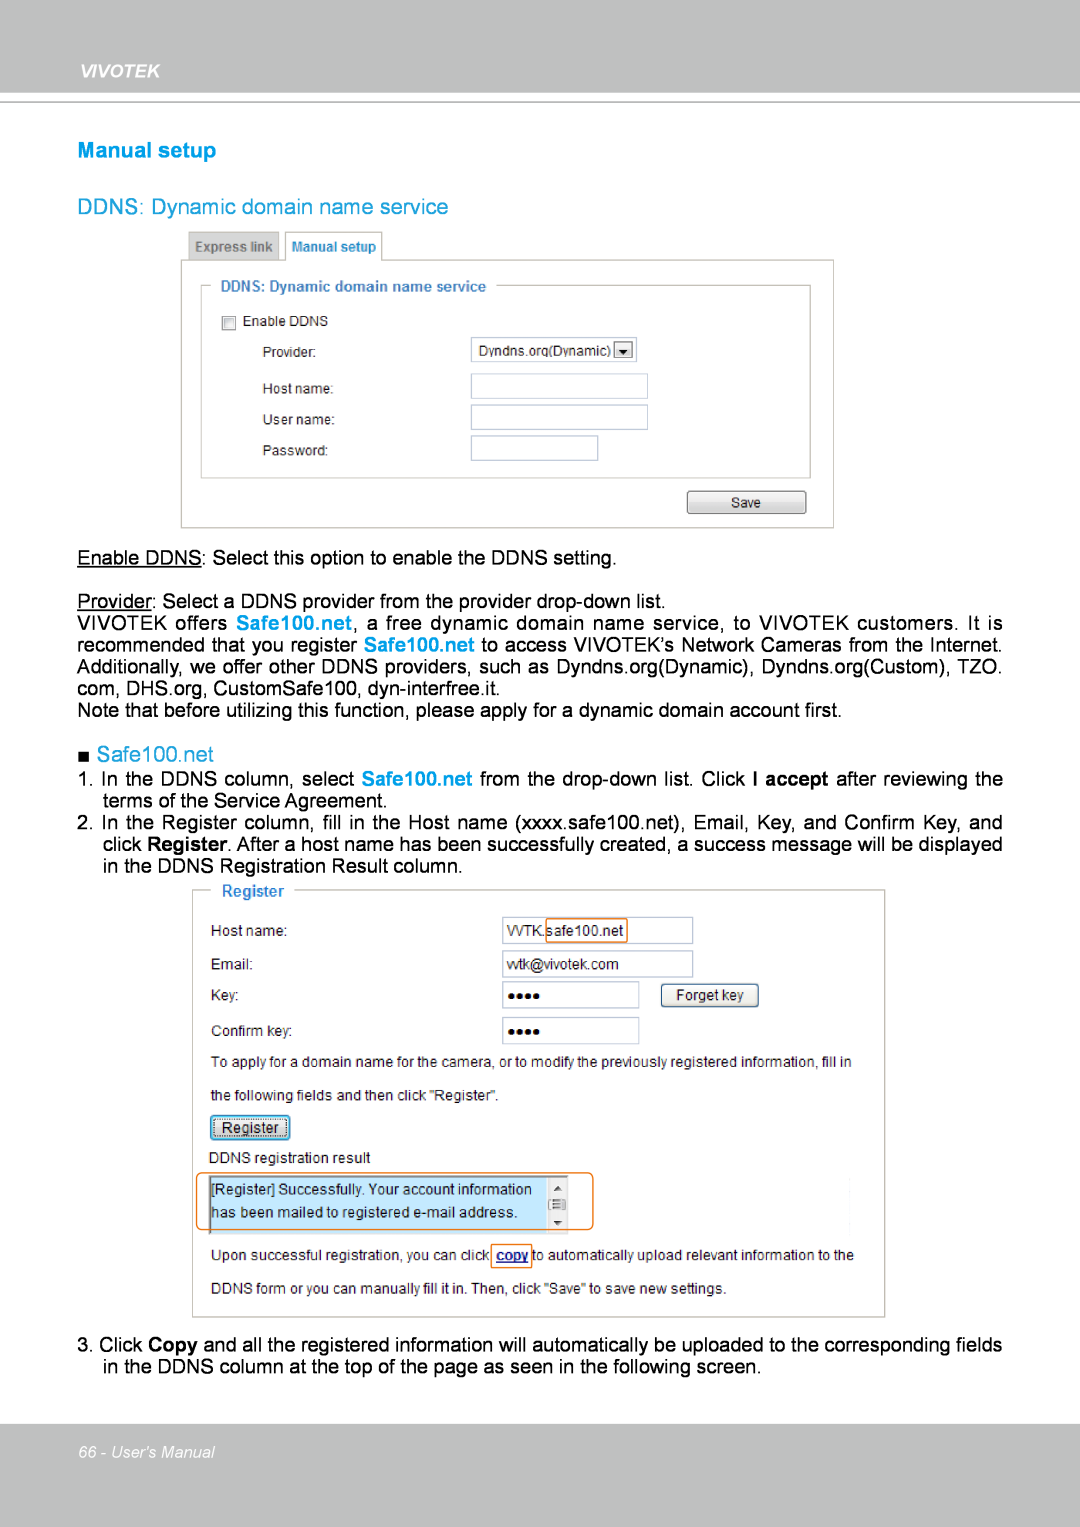 Vivotek IP8352 manual Manual setup, DDNS: Dynamic domain name service, Safe100net 